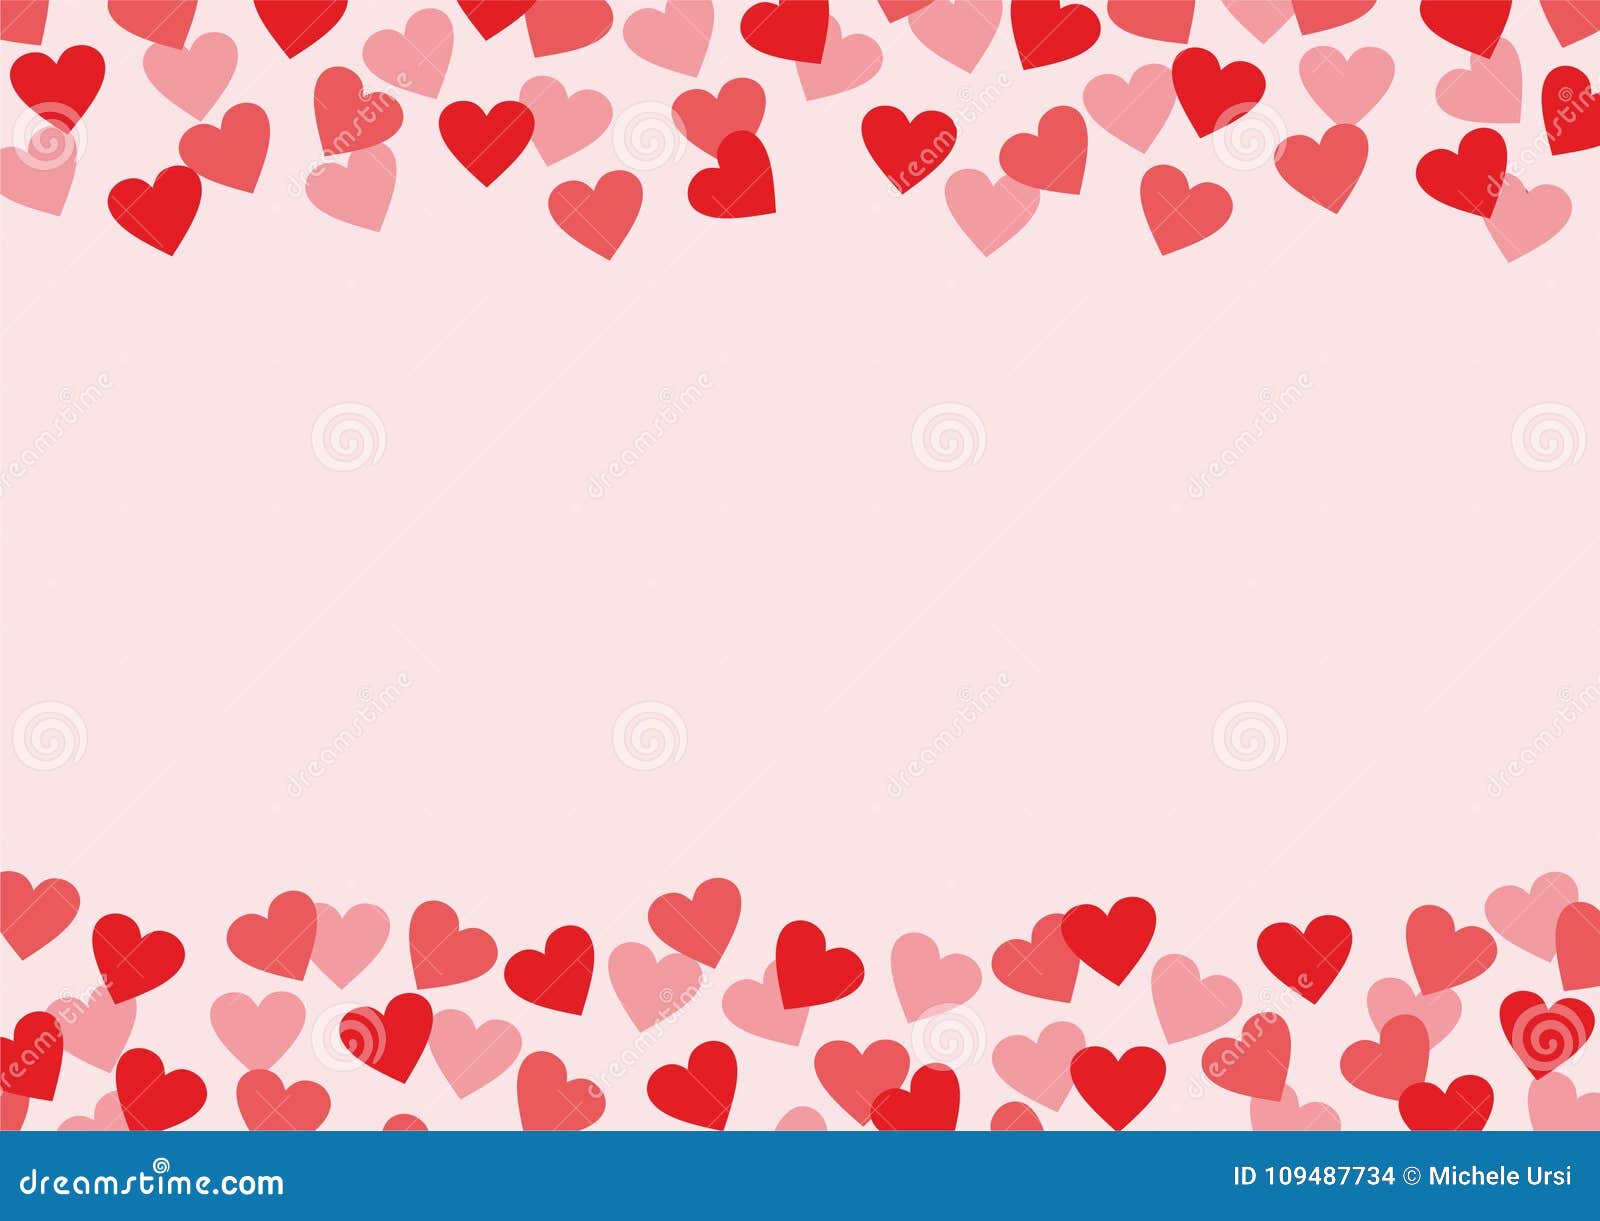 Love background stock vector. Illustration of design - 109487734